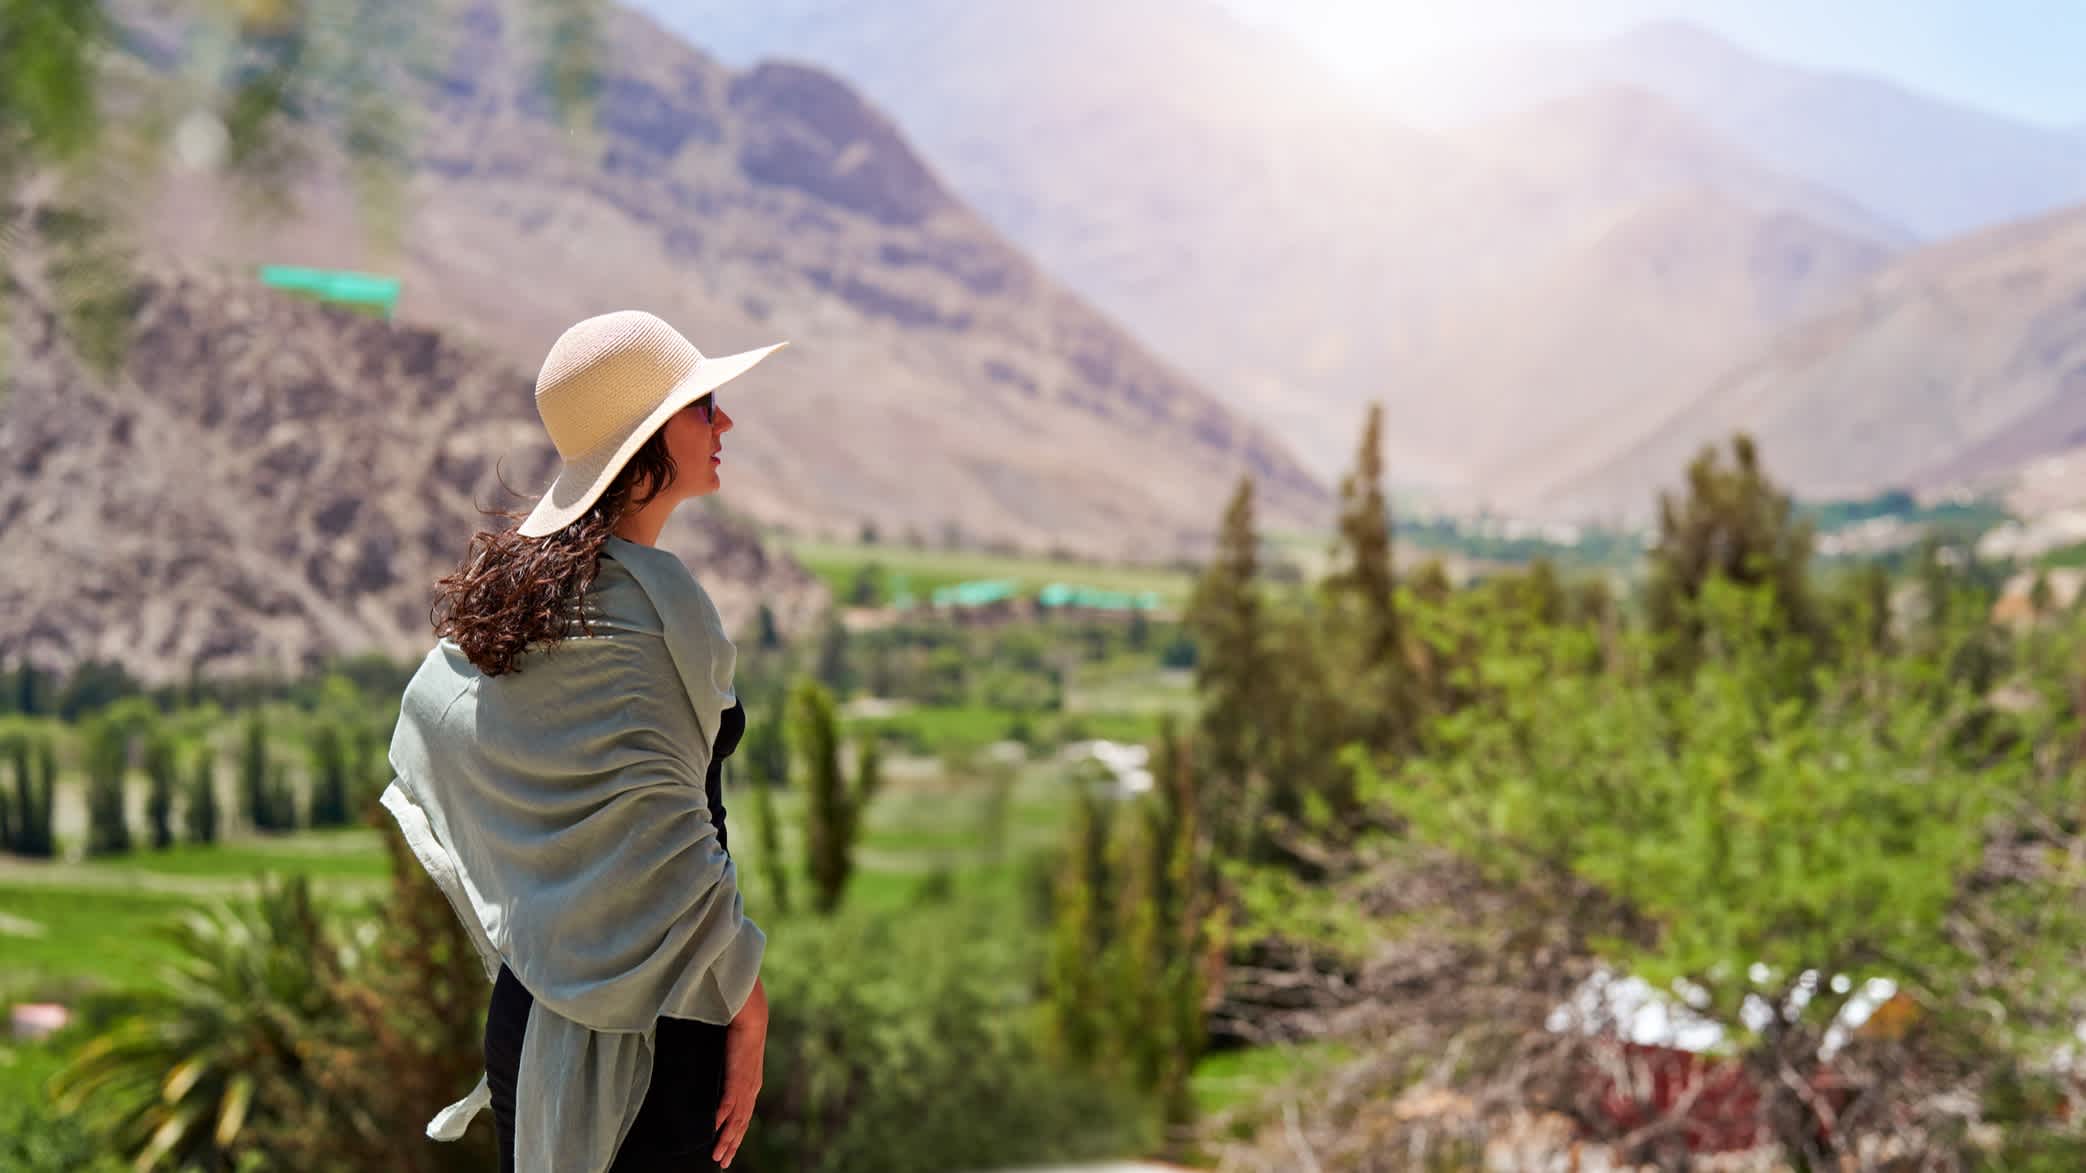 Latino-Touristin mit Blick auf die sonnige Landschaft in Paihuano, Valle del Elqui, Chile.

